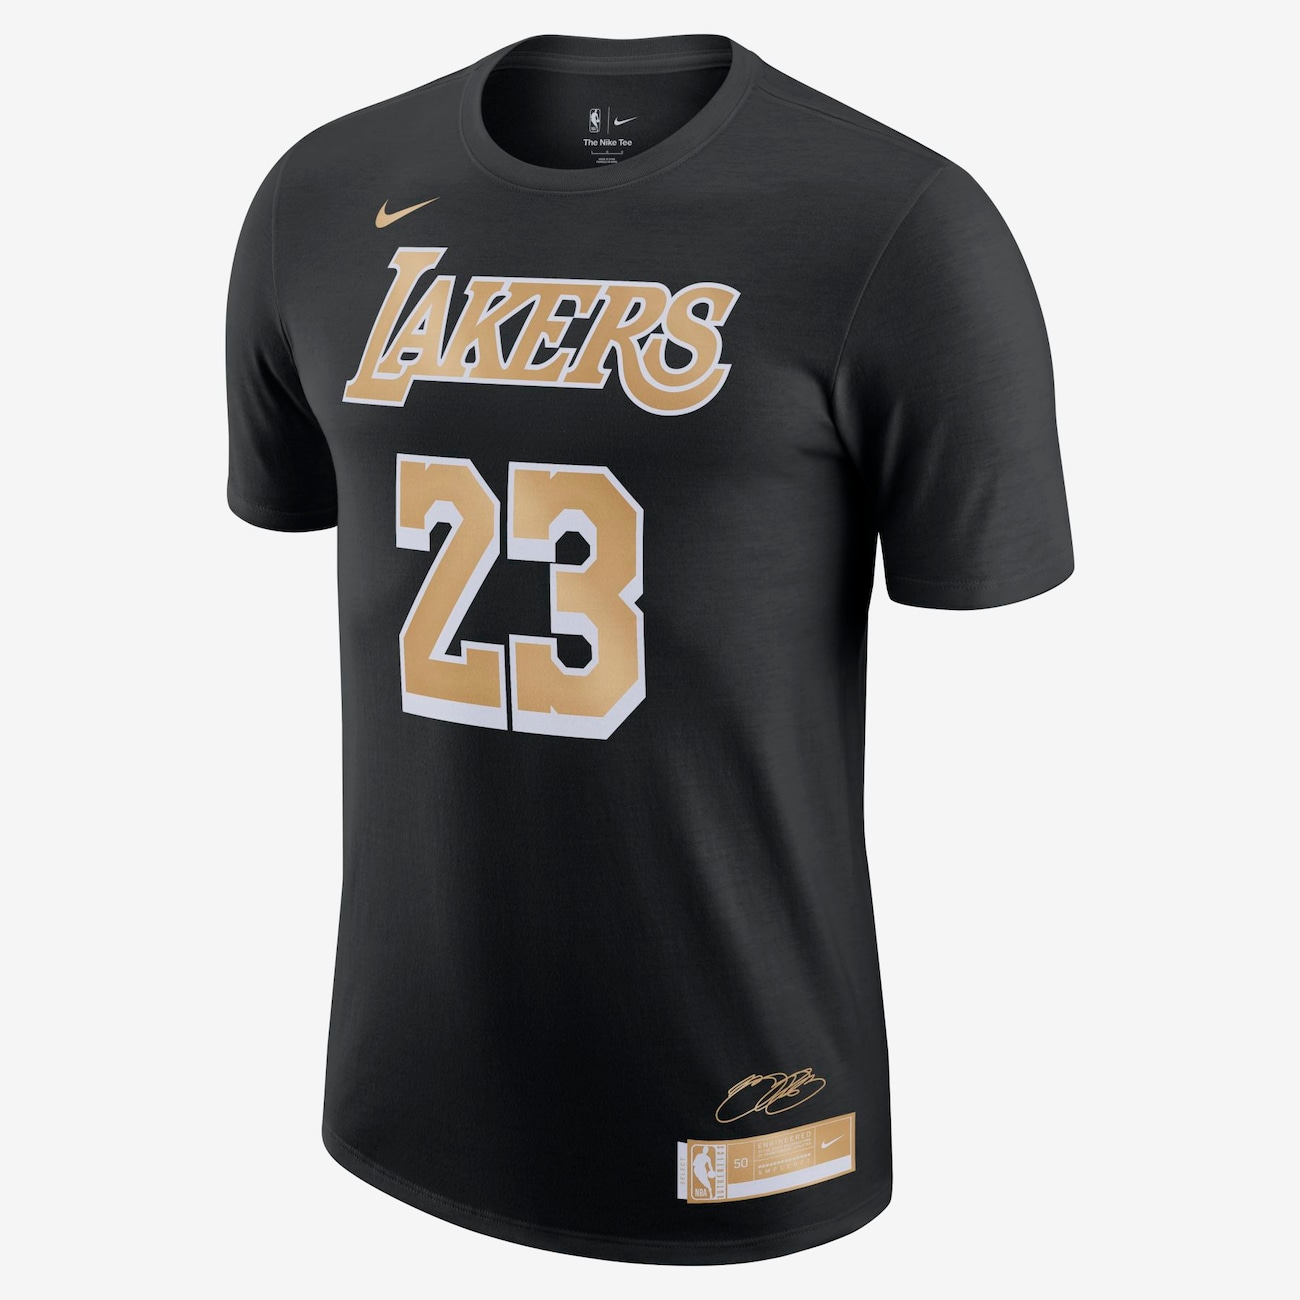 Camiseta Nike NBA LeBron James Select Series Masculina